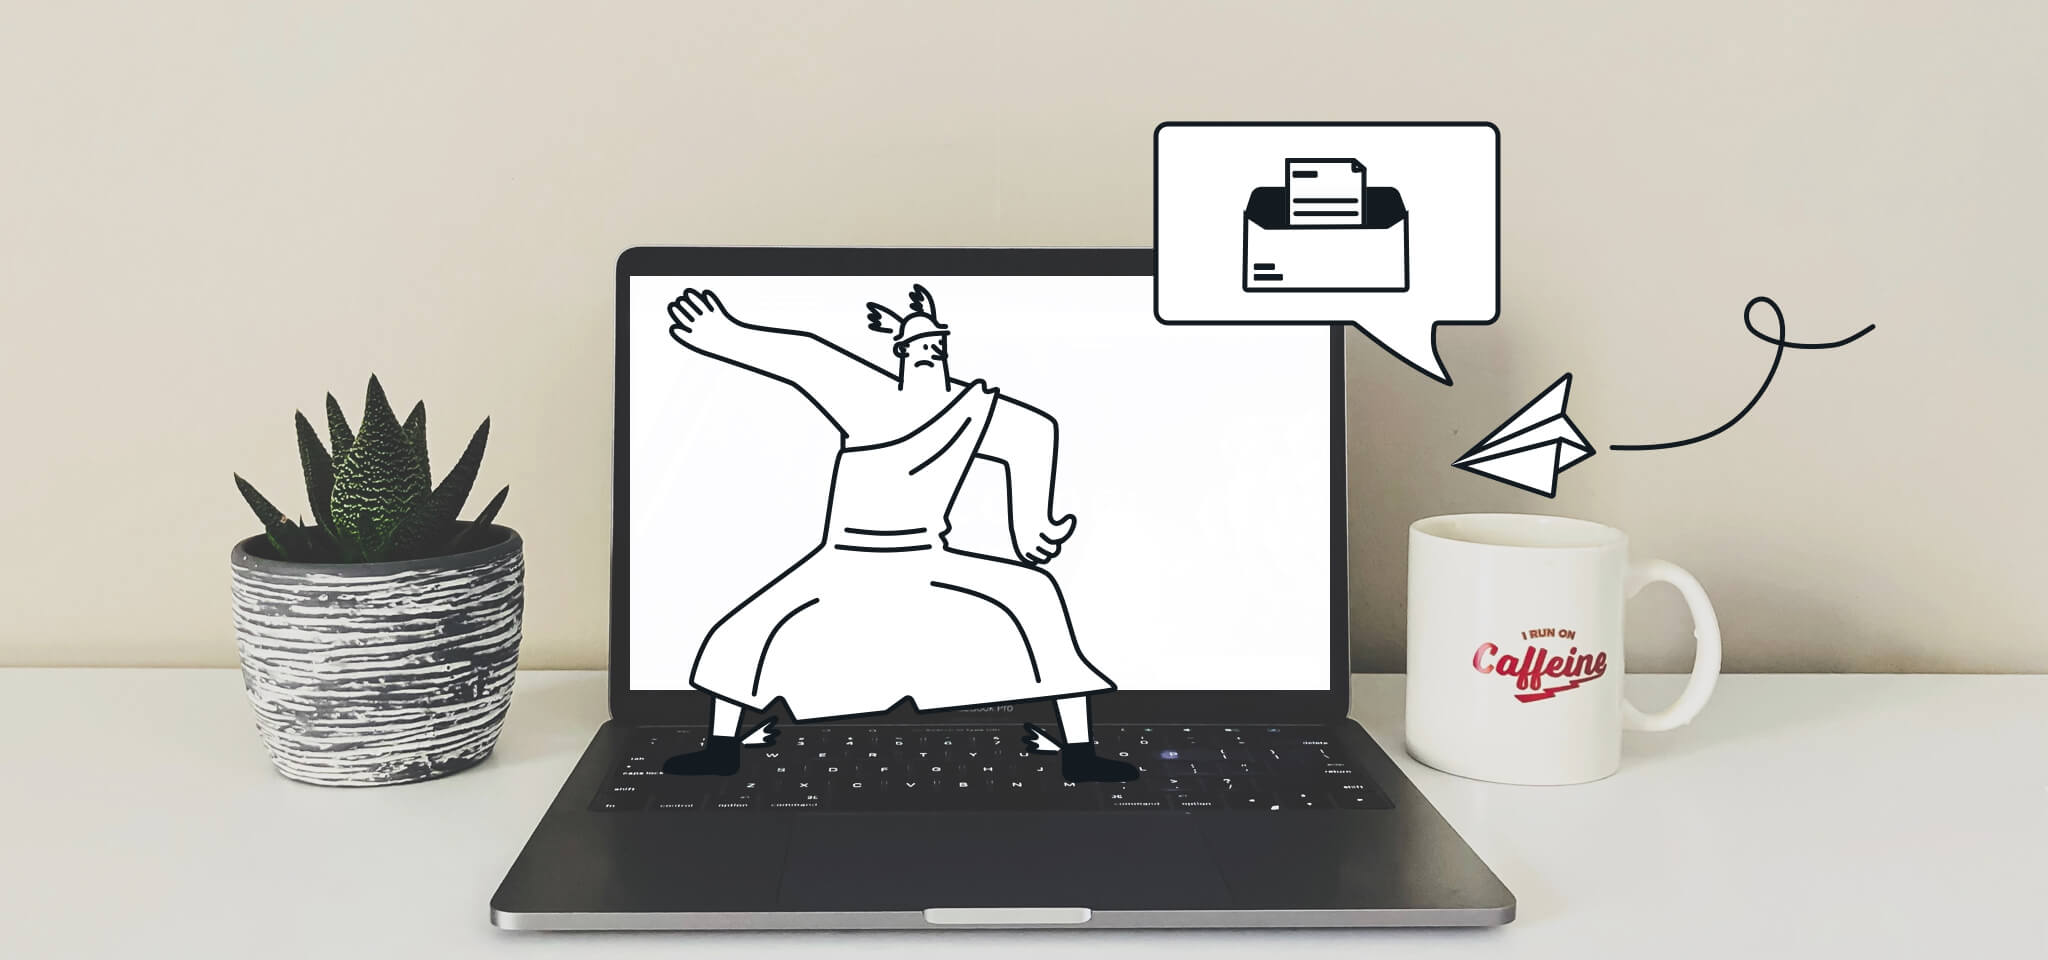 Hermes dancing on a laptop next to a mug